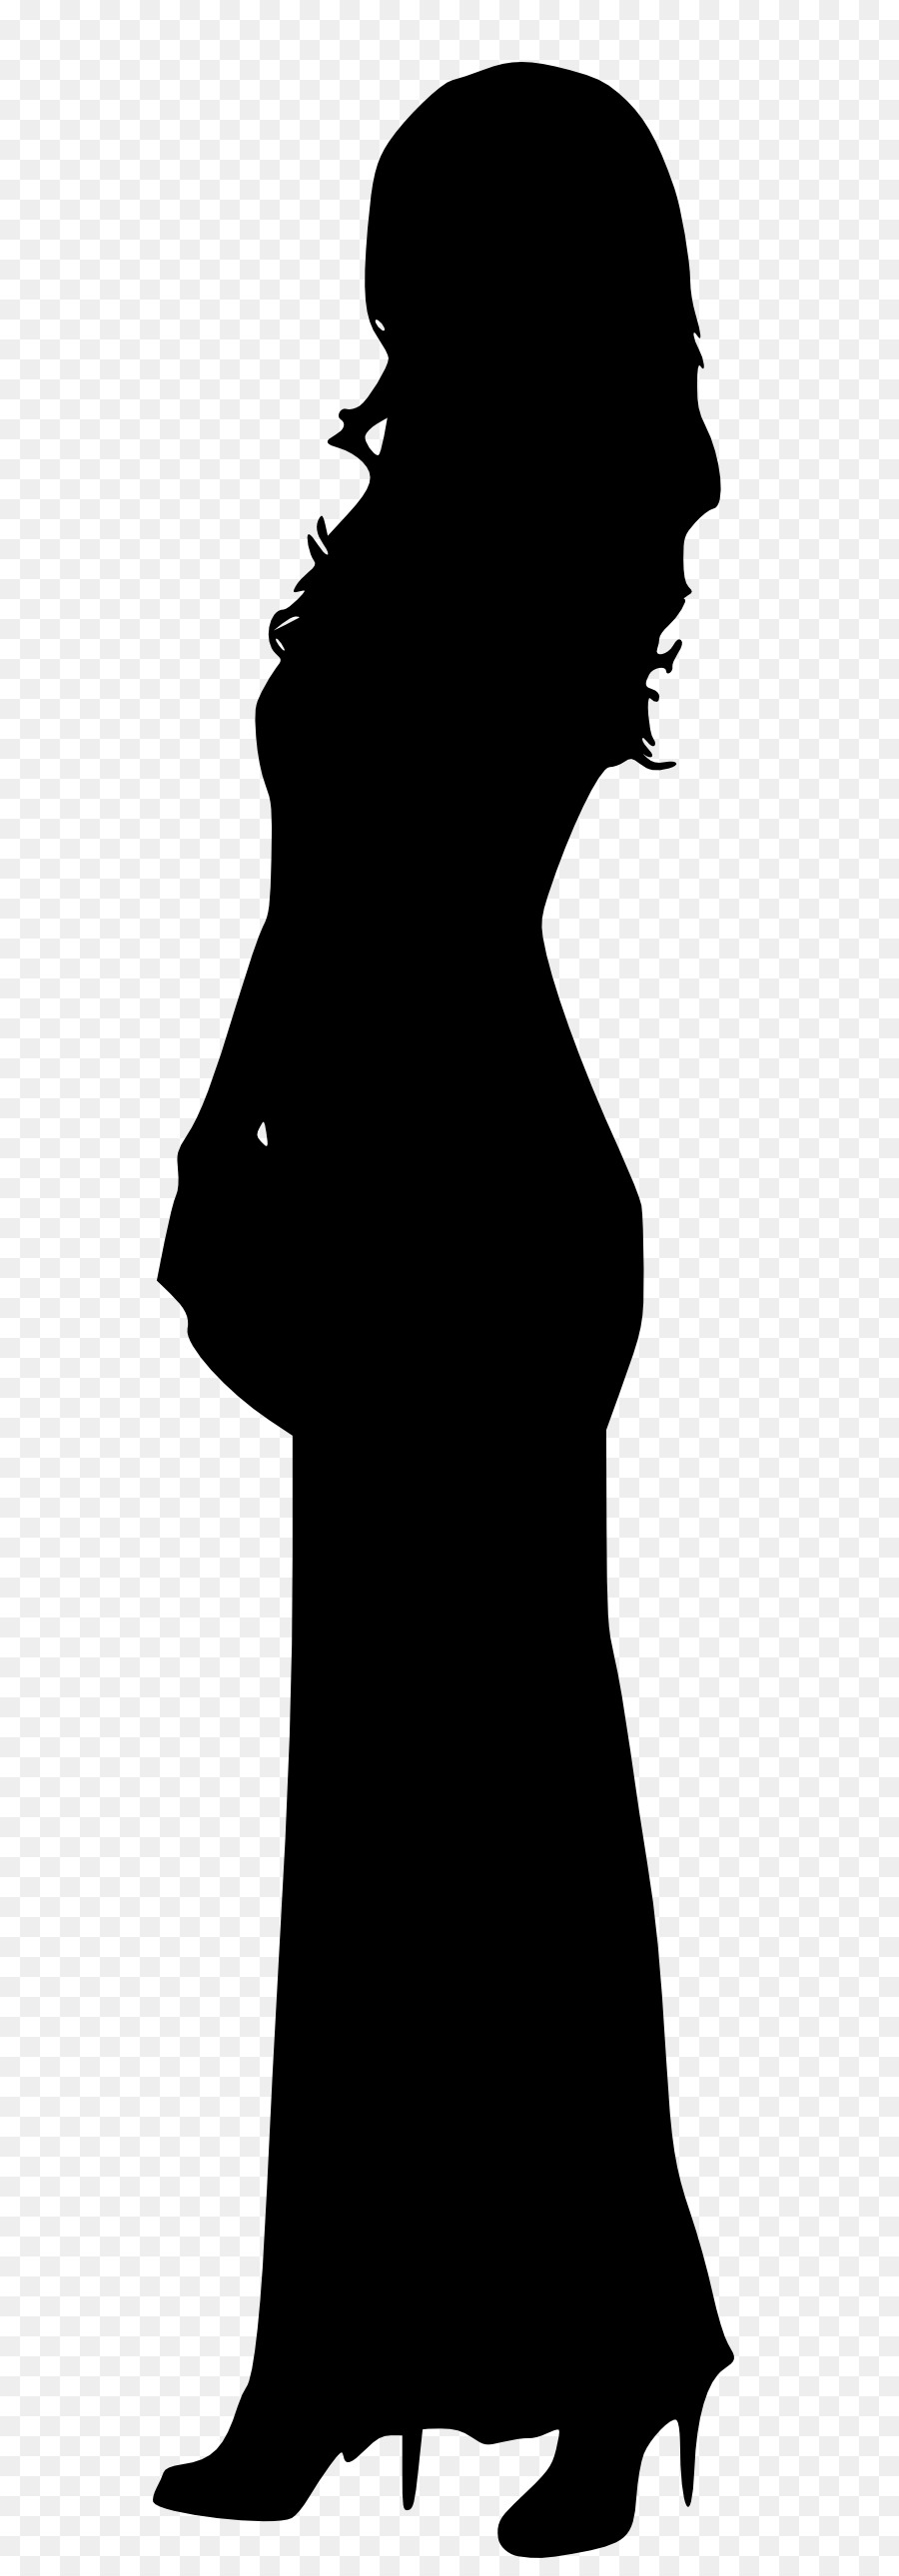 Woman Silhouette Clip art - fashion labels png download - 657*1600 - Free Transparent Woman png Download.